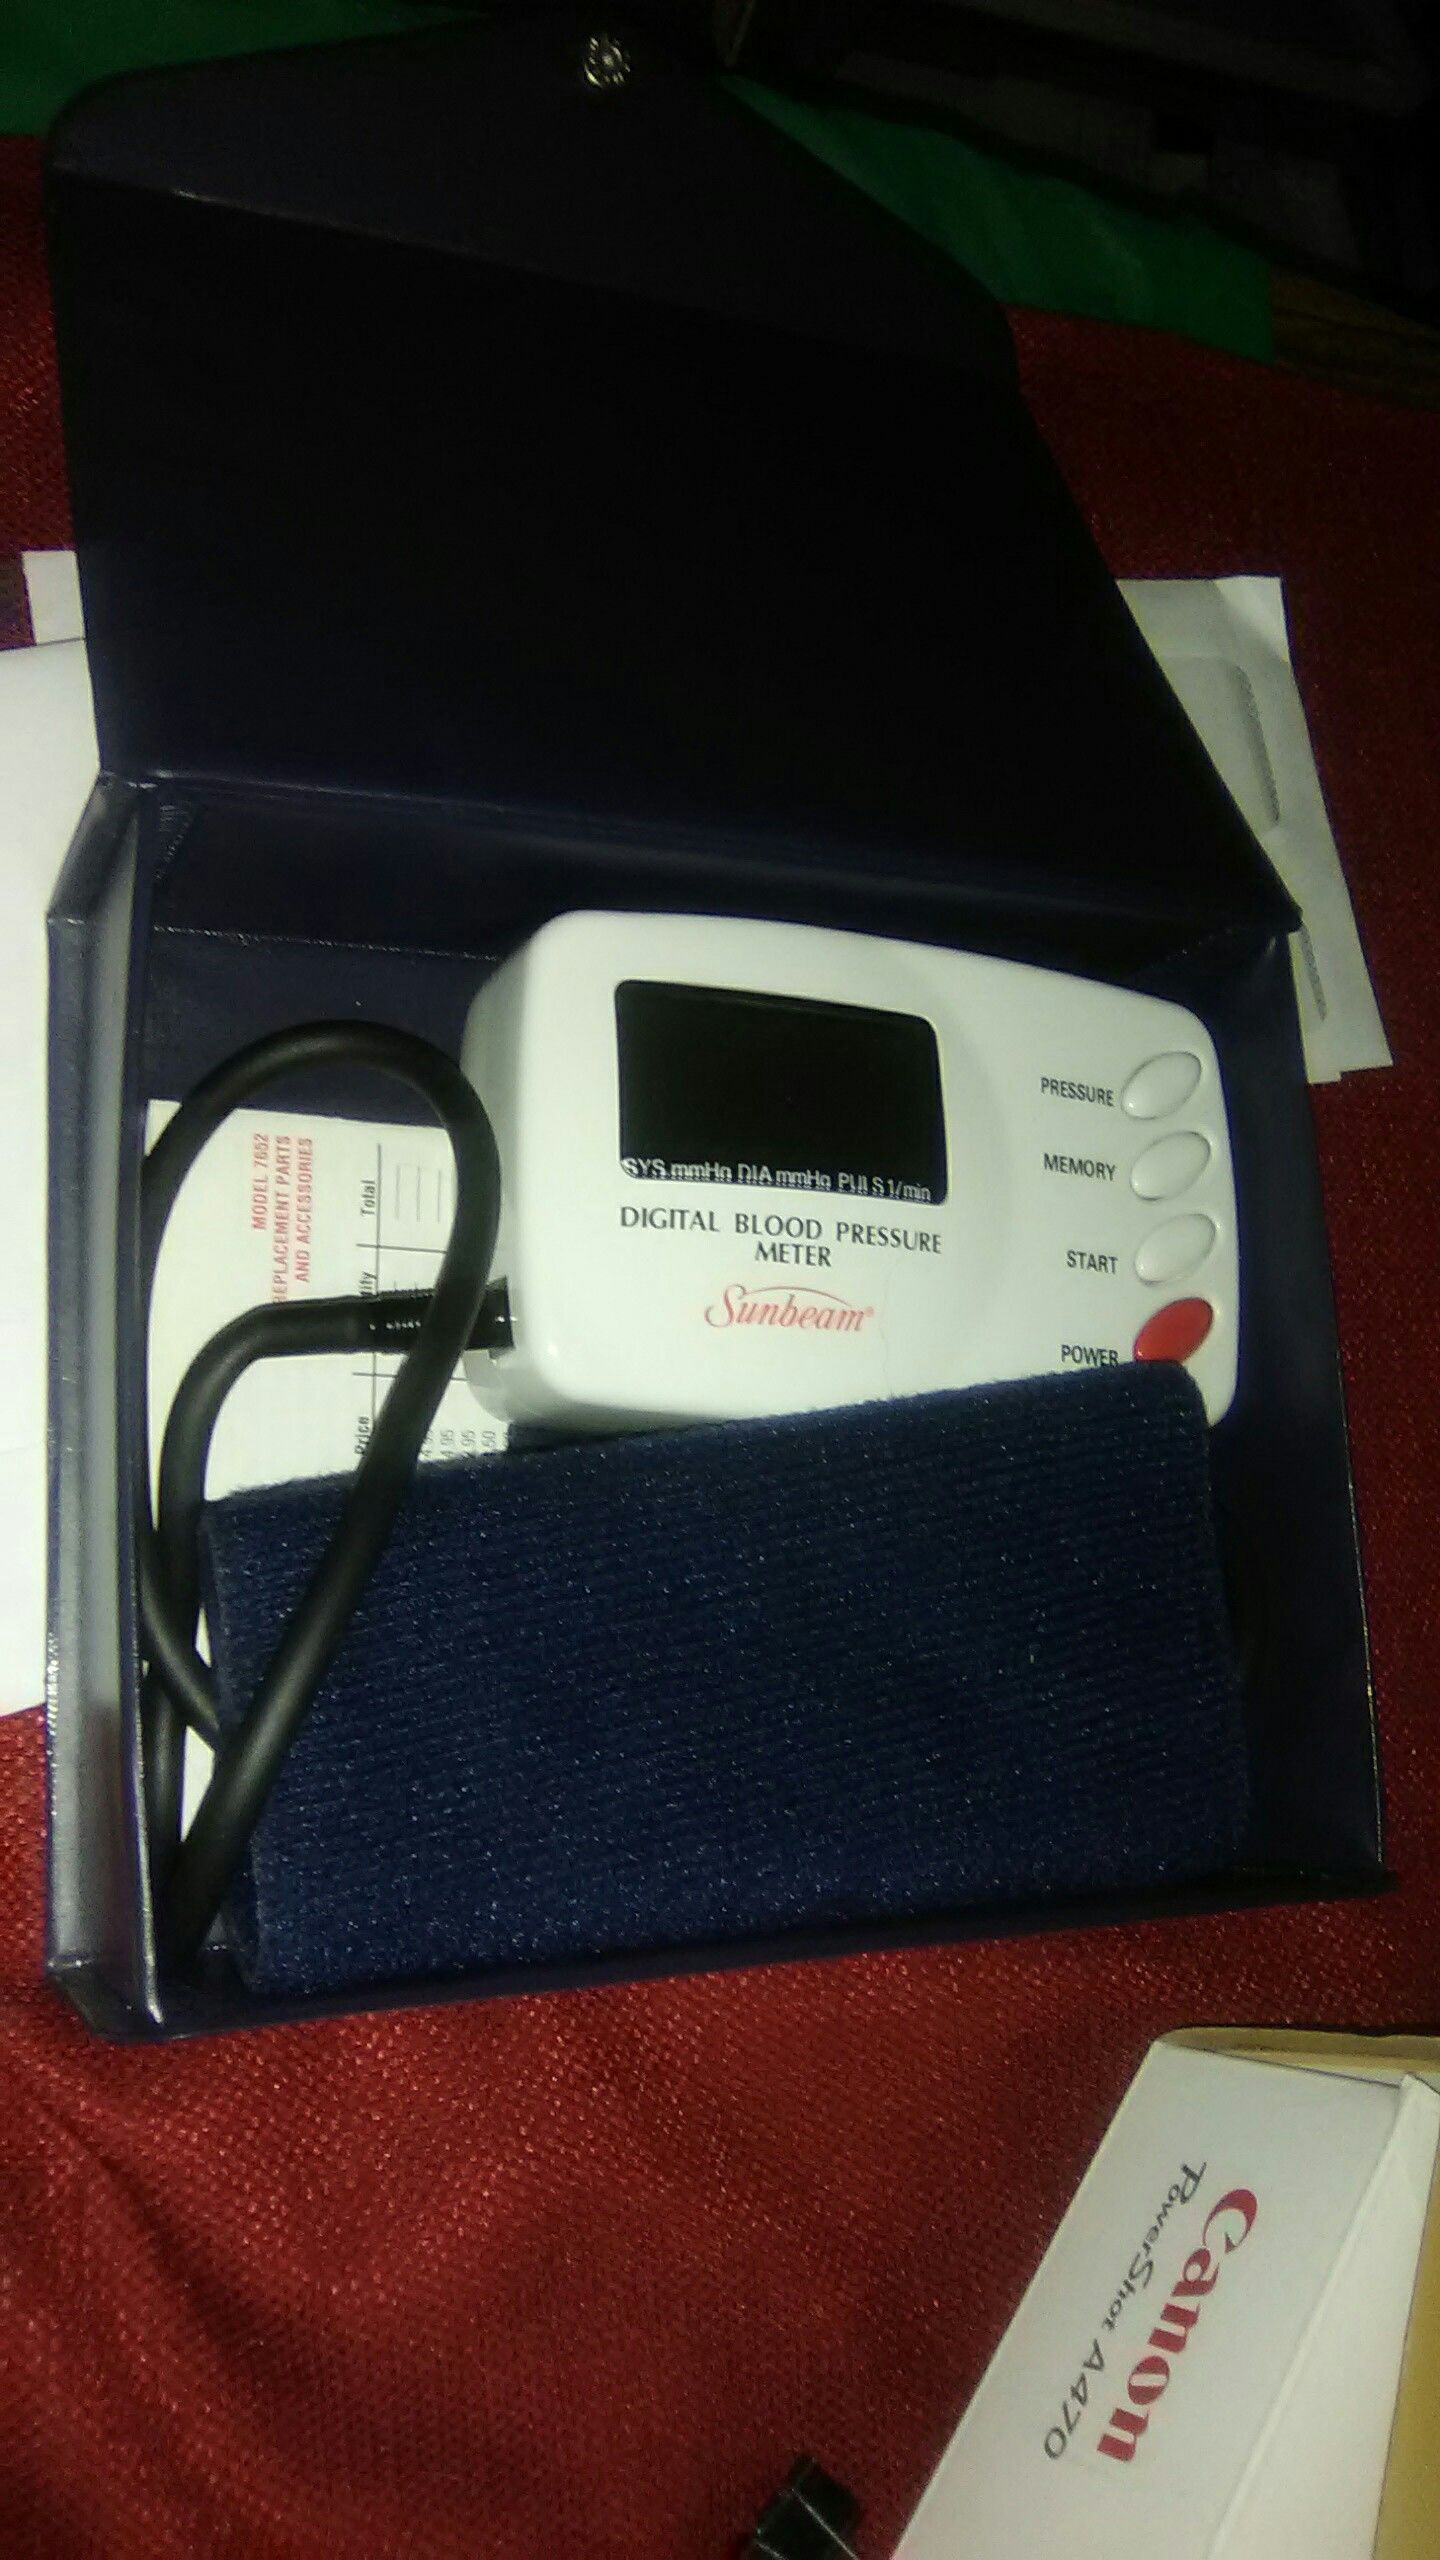 Blood pressure machine almost new